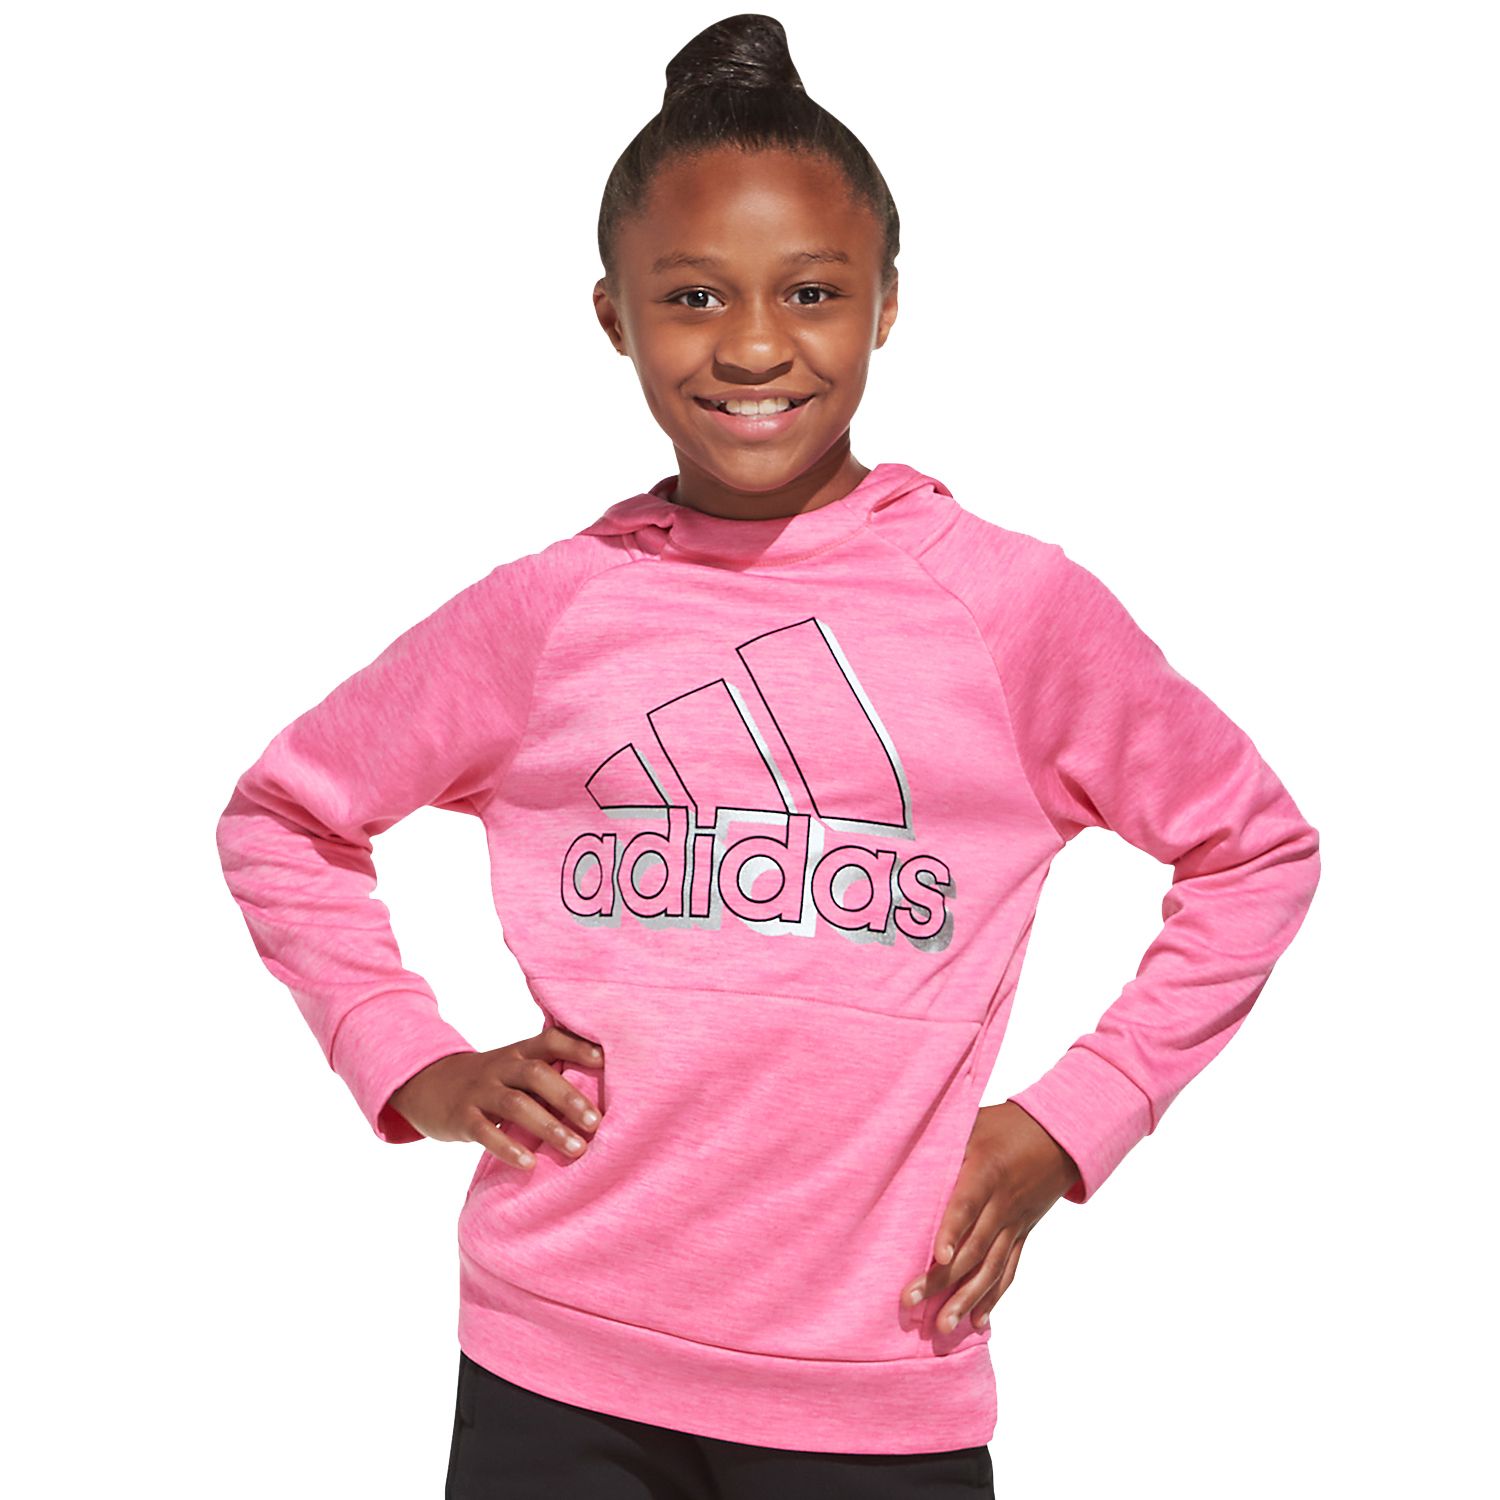 girls pink adidas hoodie